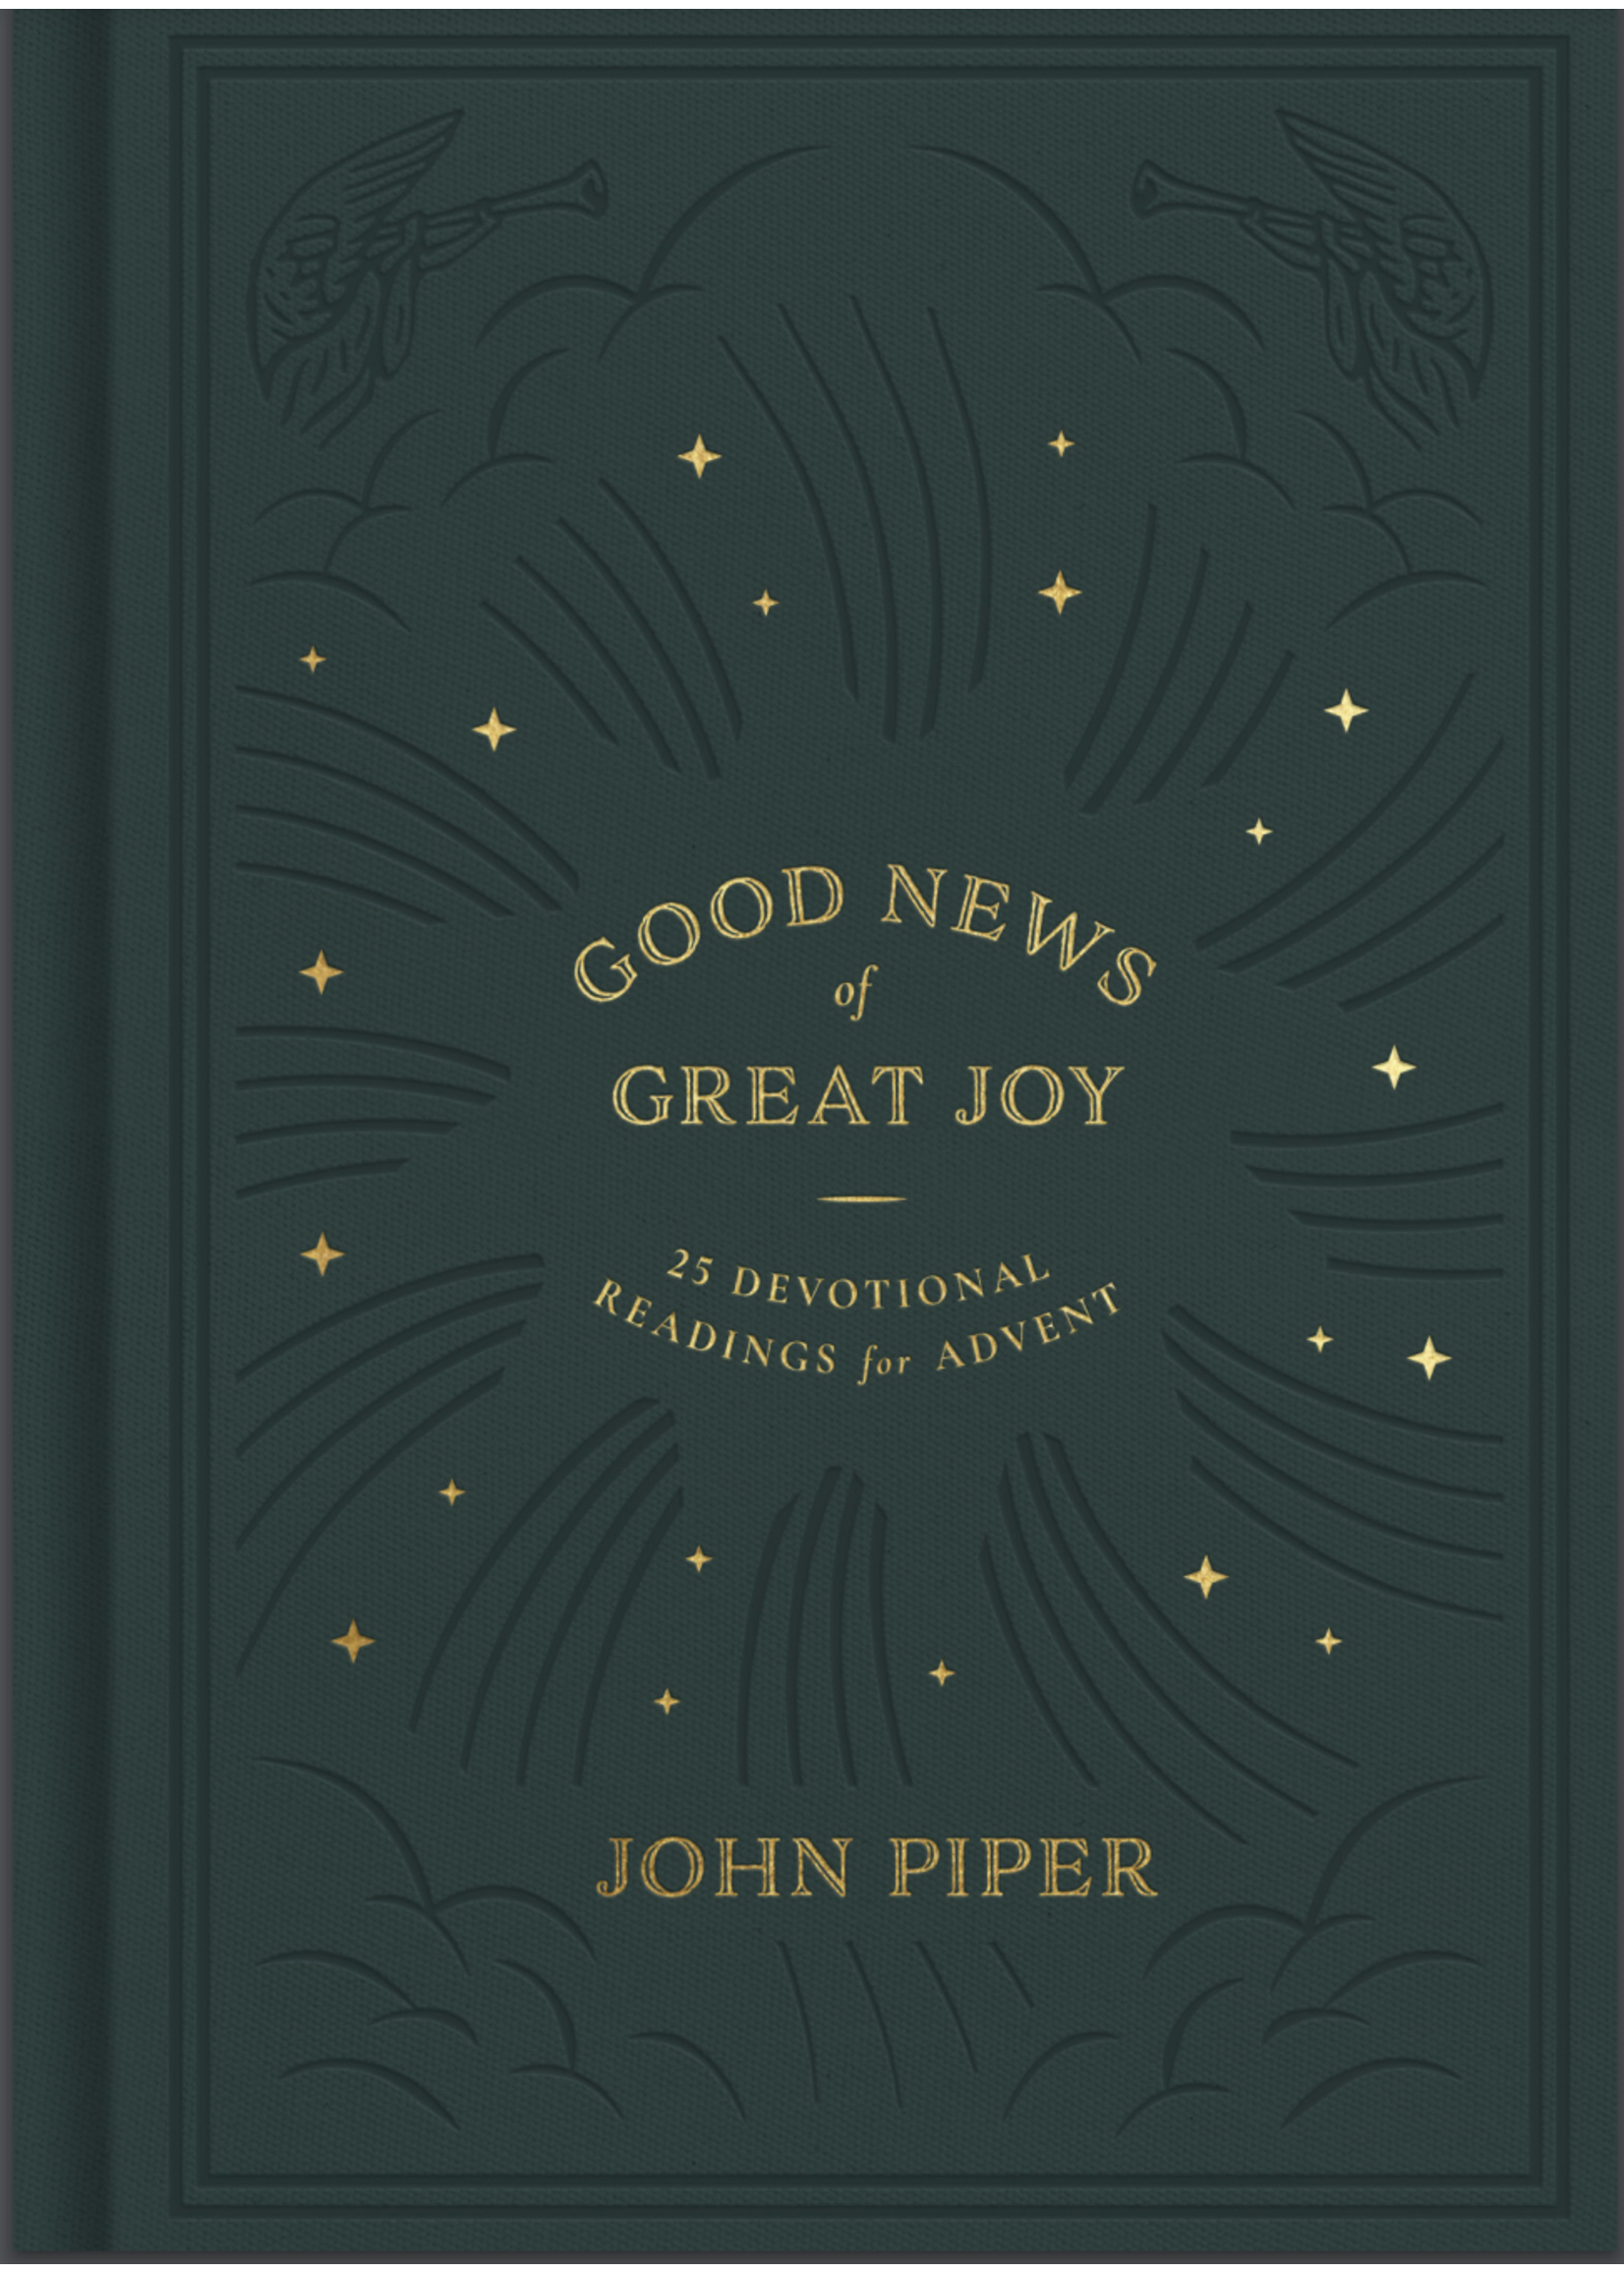 Piper, John Good News of Great Joy: 25 Devotional Readings for Advent